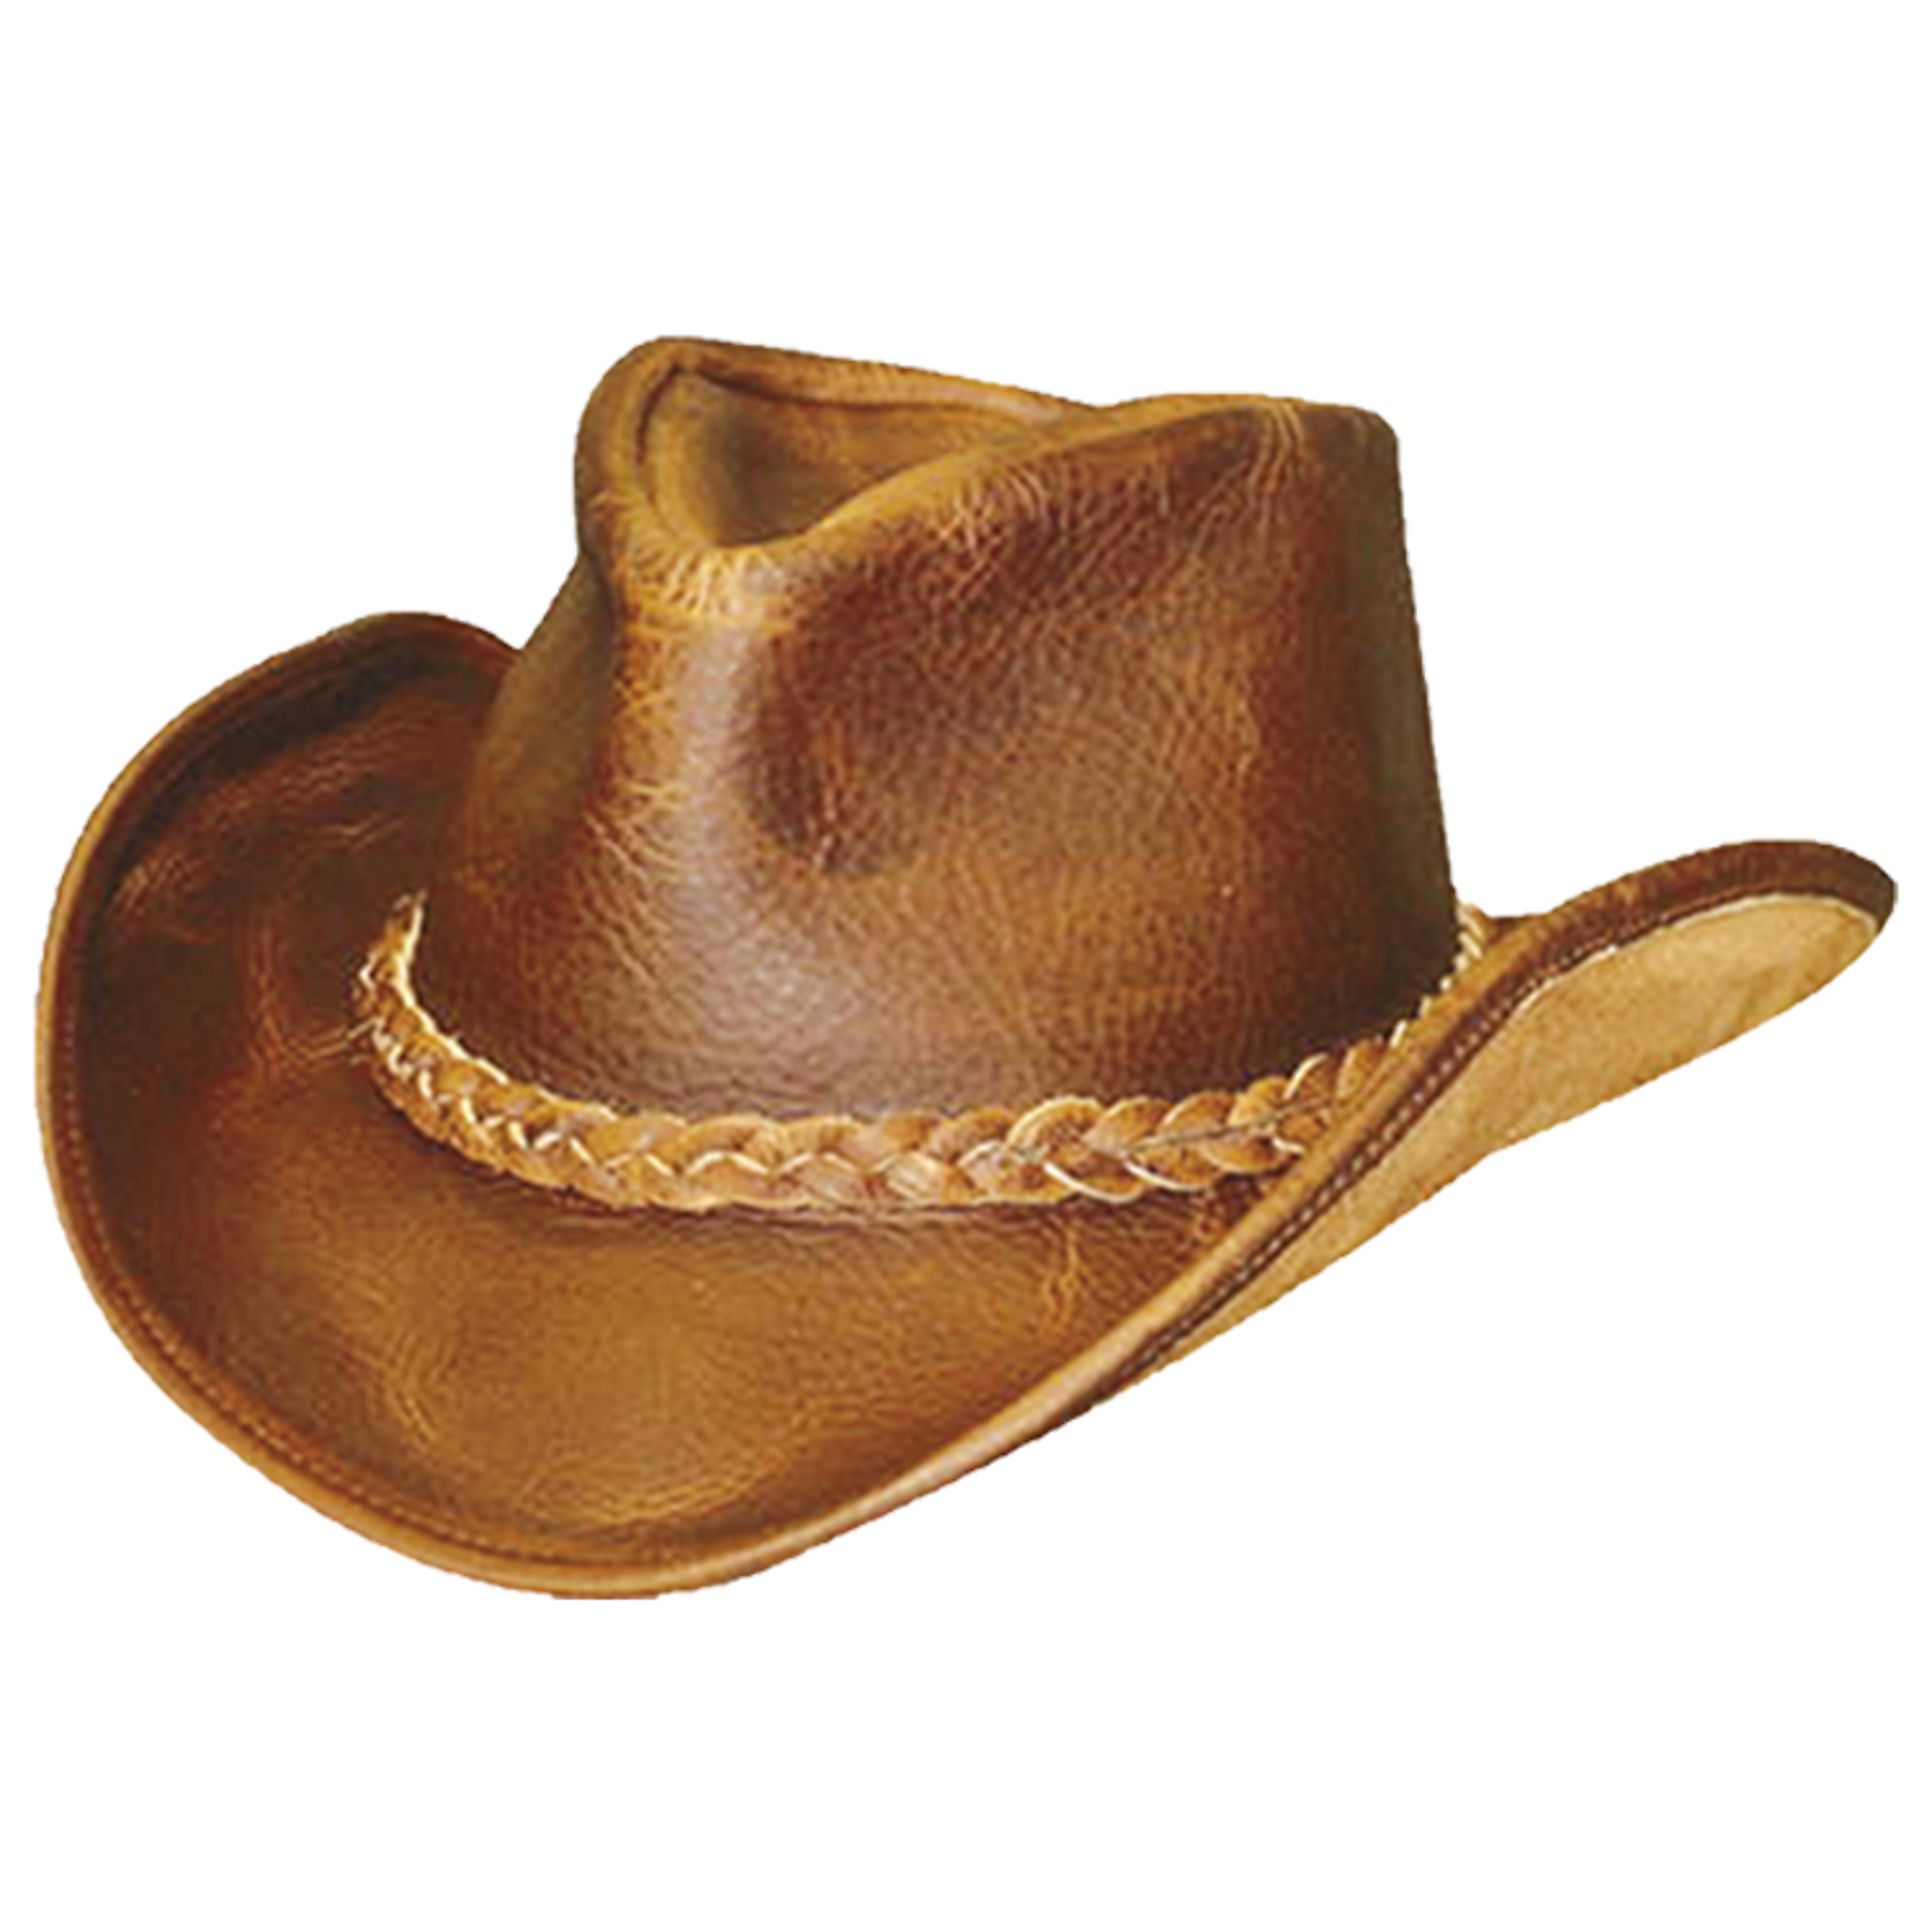 Henschel Hat Company, Coyote Hat, Leather, Size 3XL, Color Brown, Hat Style Hat, Model 1101-23-XXXL